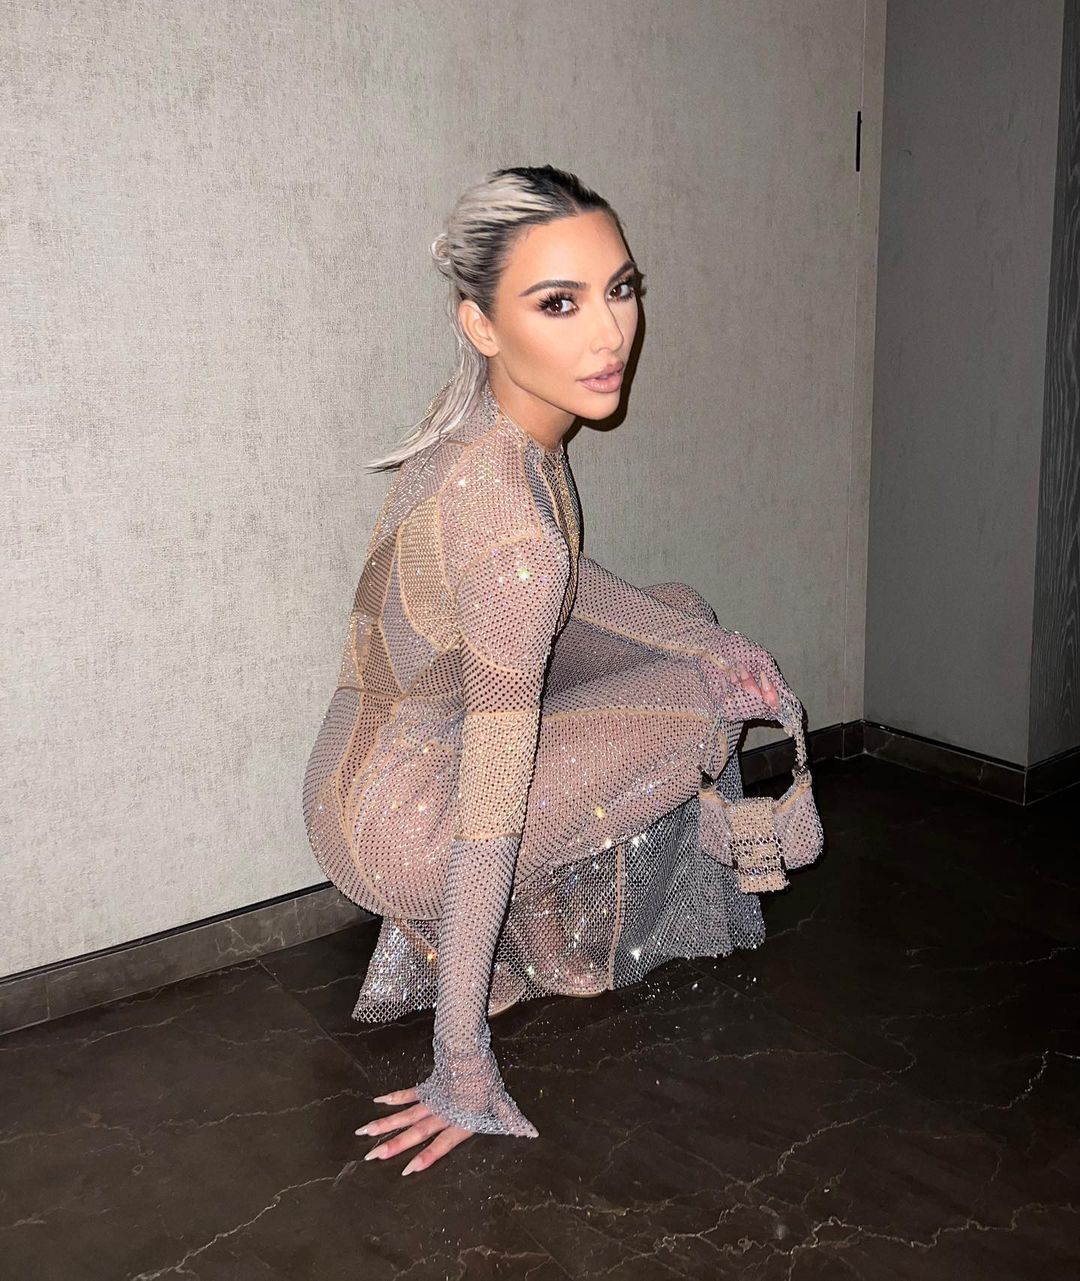 Sexy photo of Kim Kardashian attends the Fendi Show at NYFW